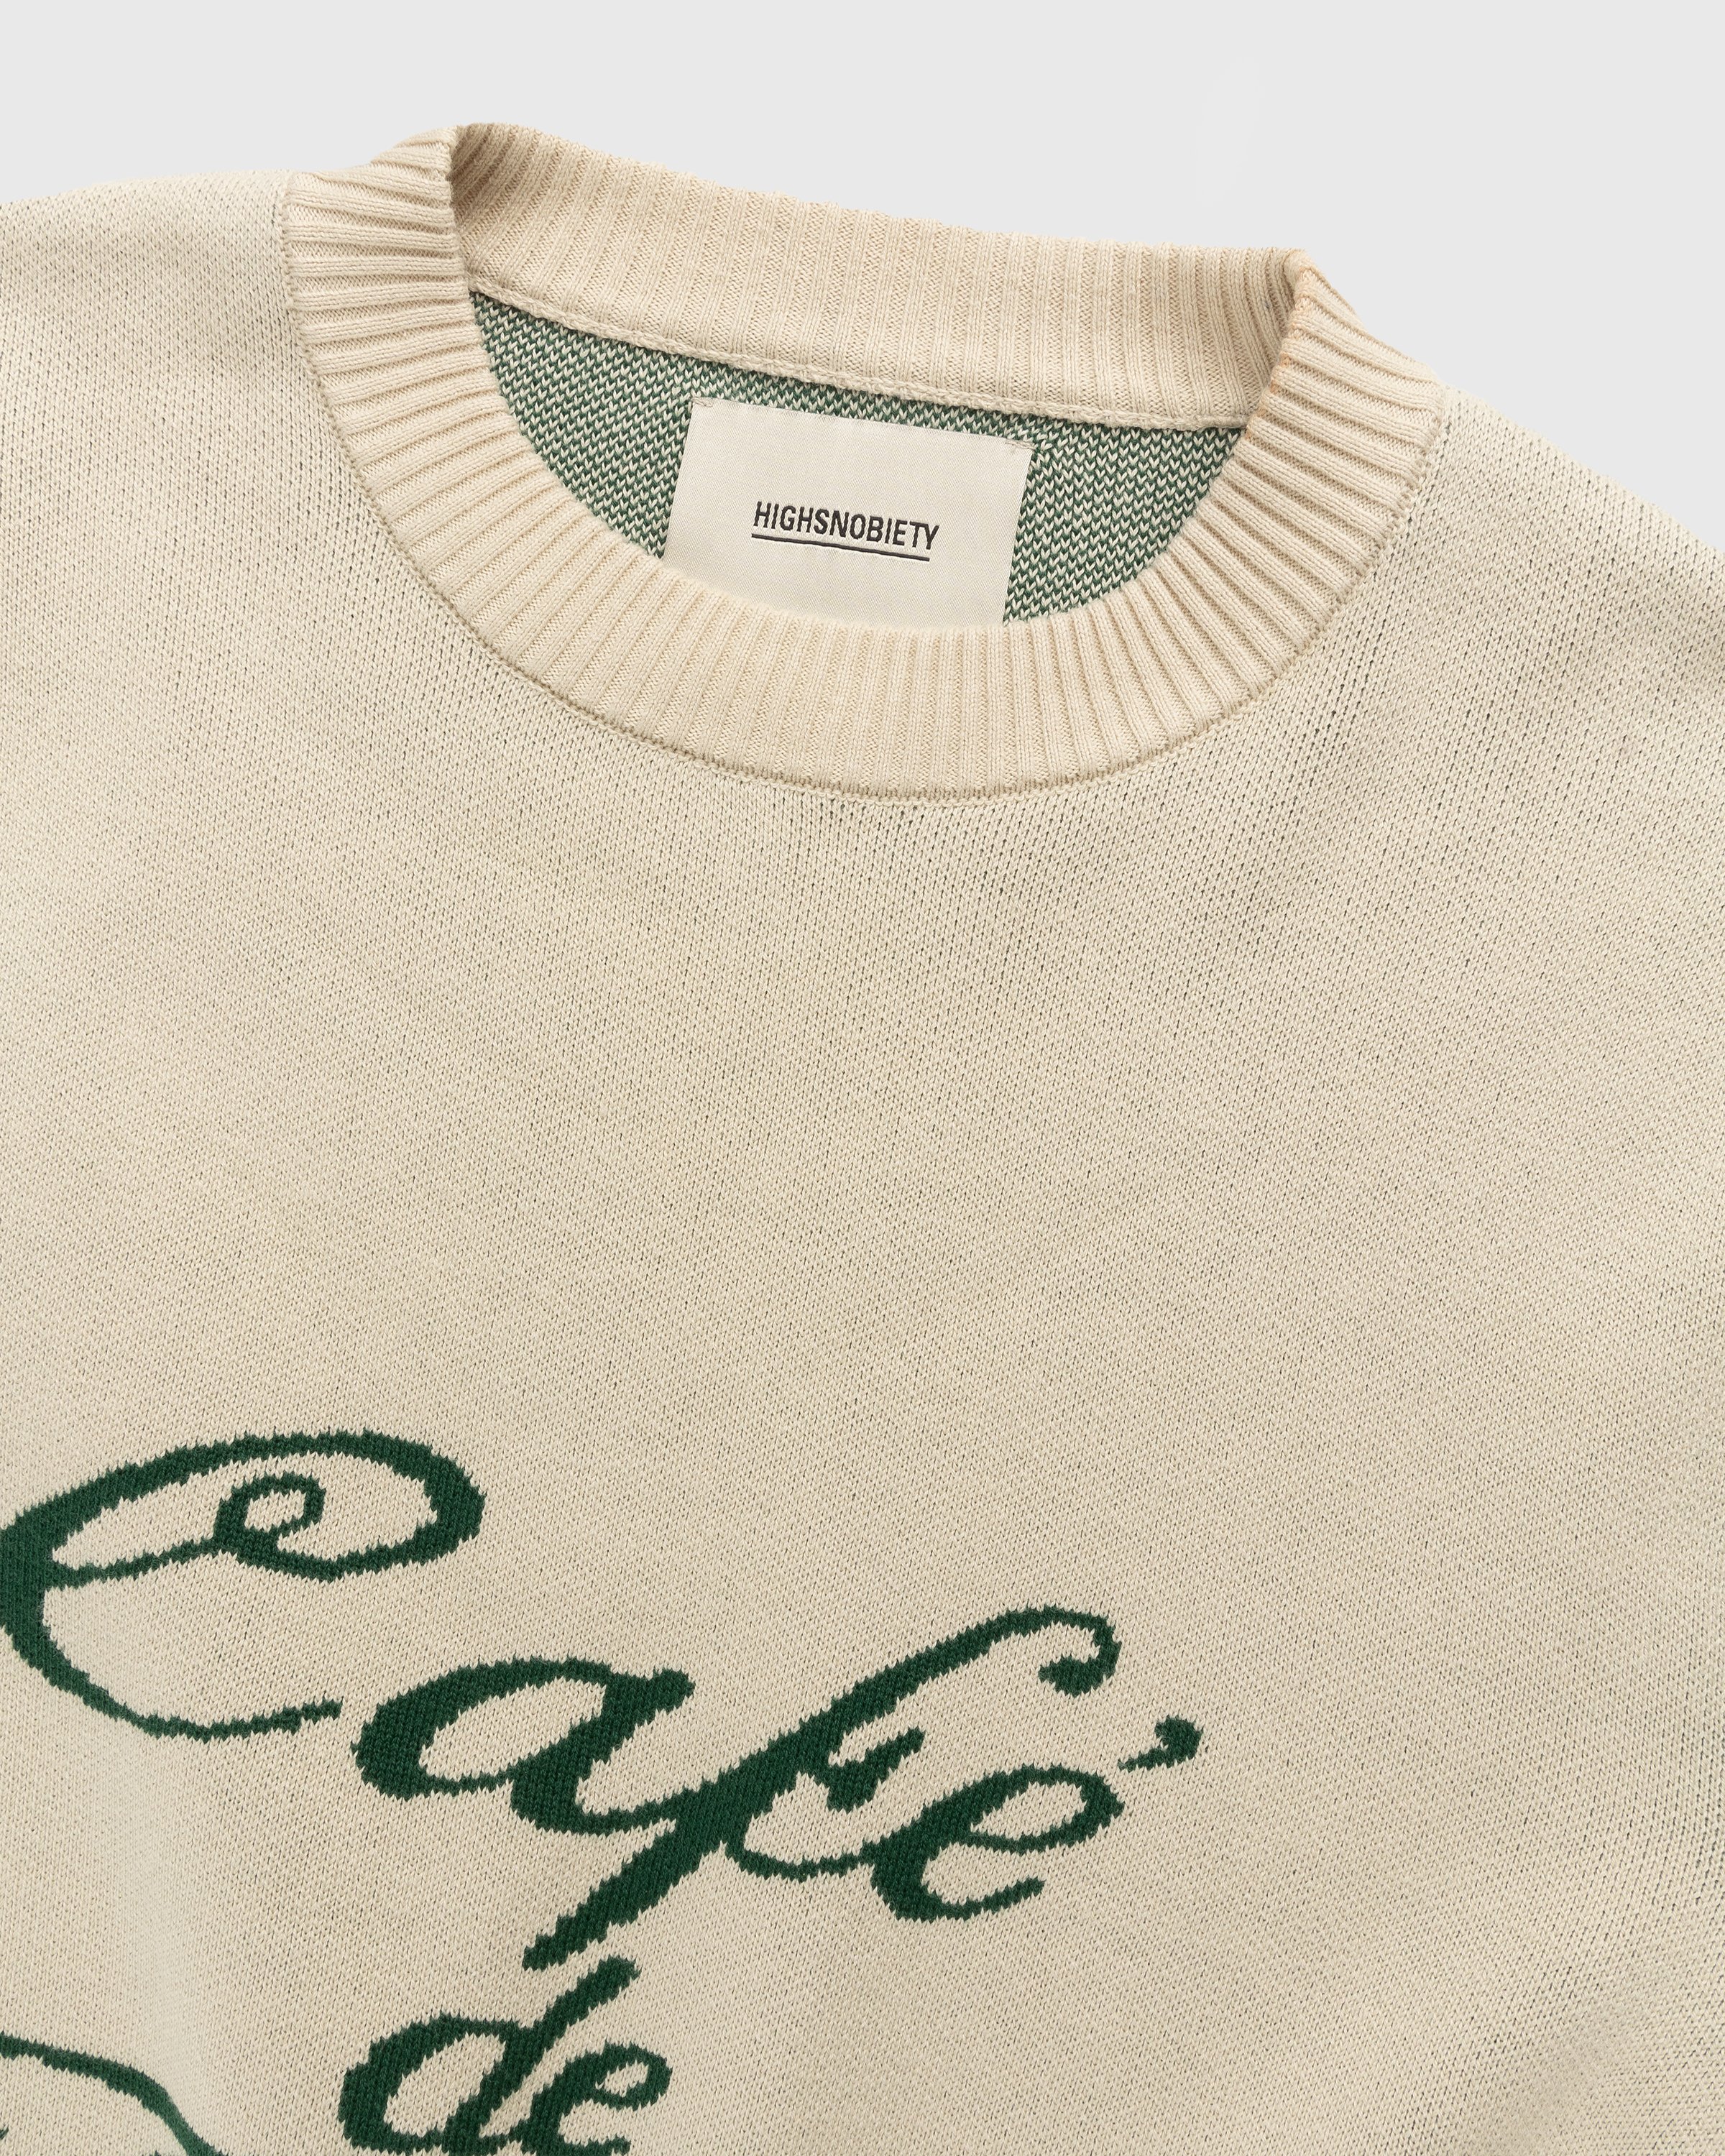 Café de Flore x Highsnobiety - Knitted Jumper - Clothing - Beige - Image 4